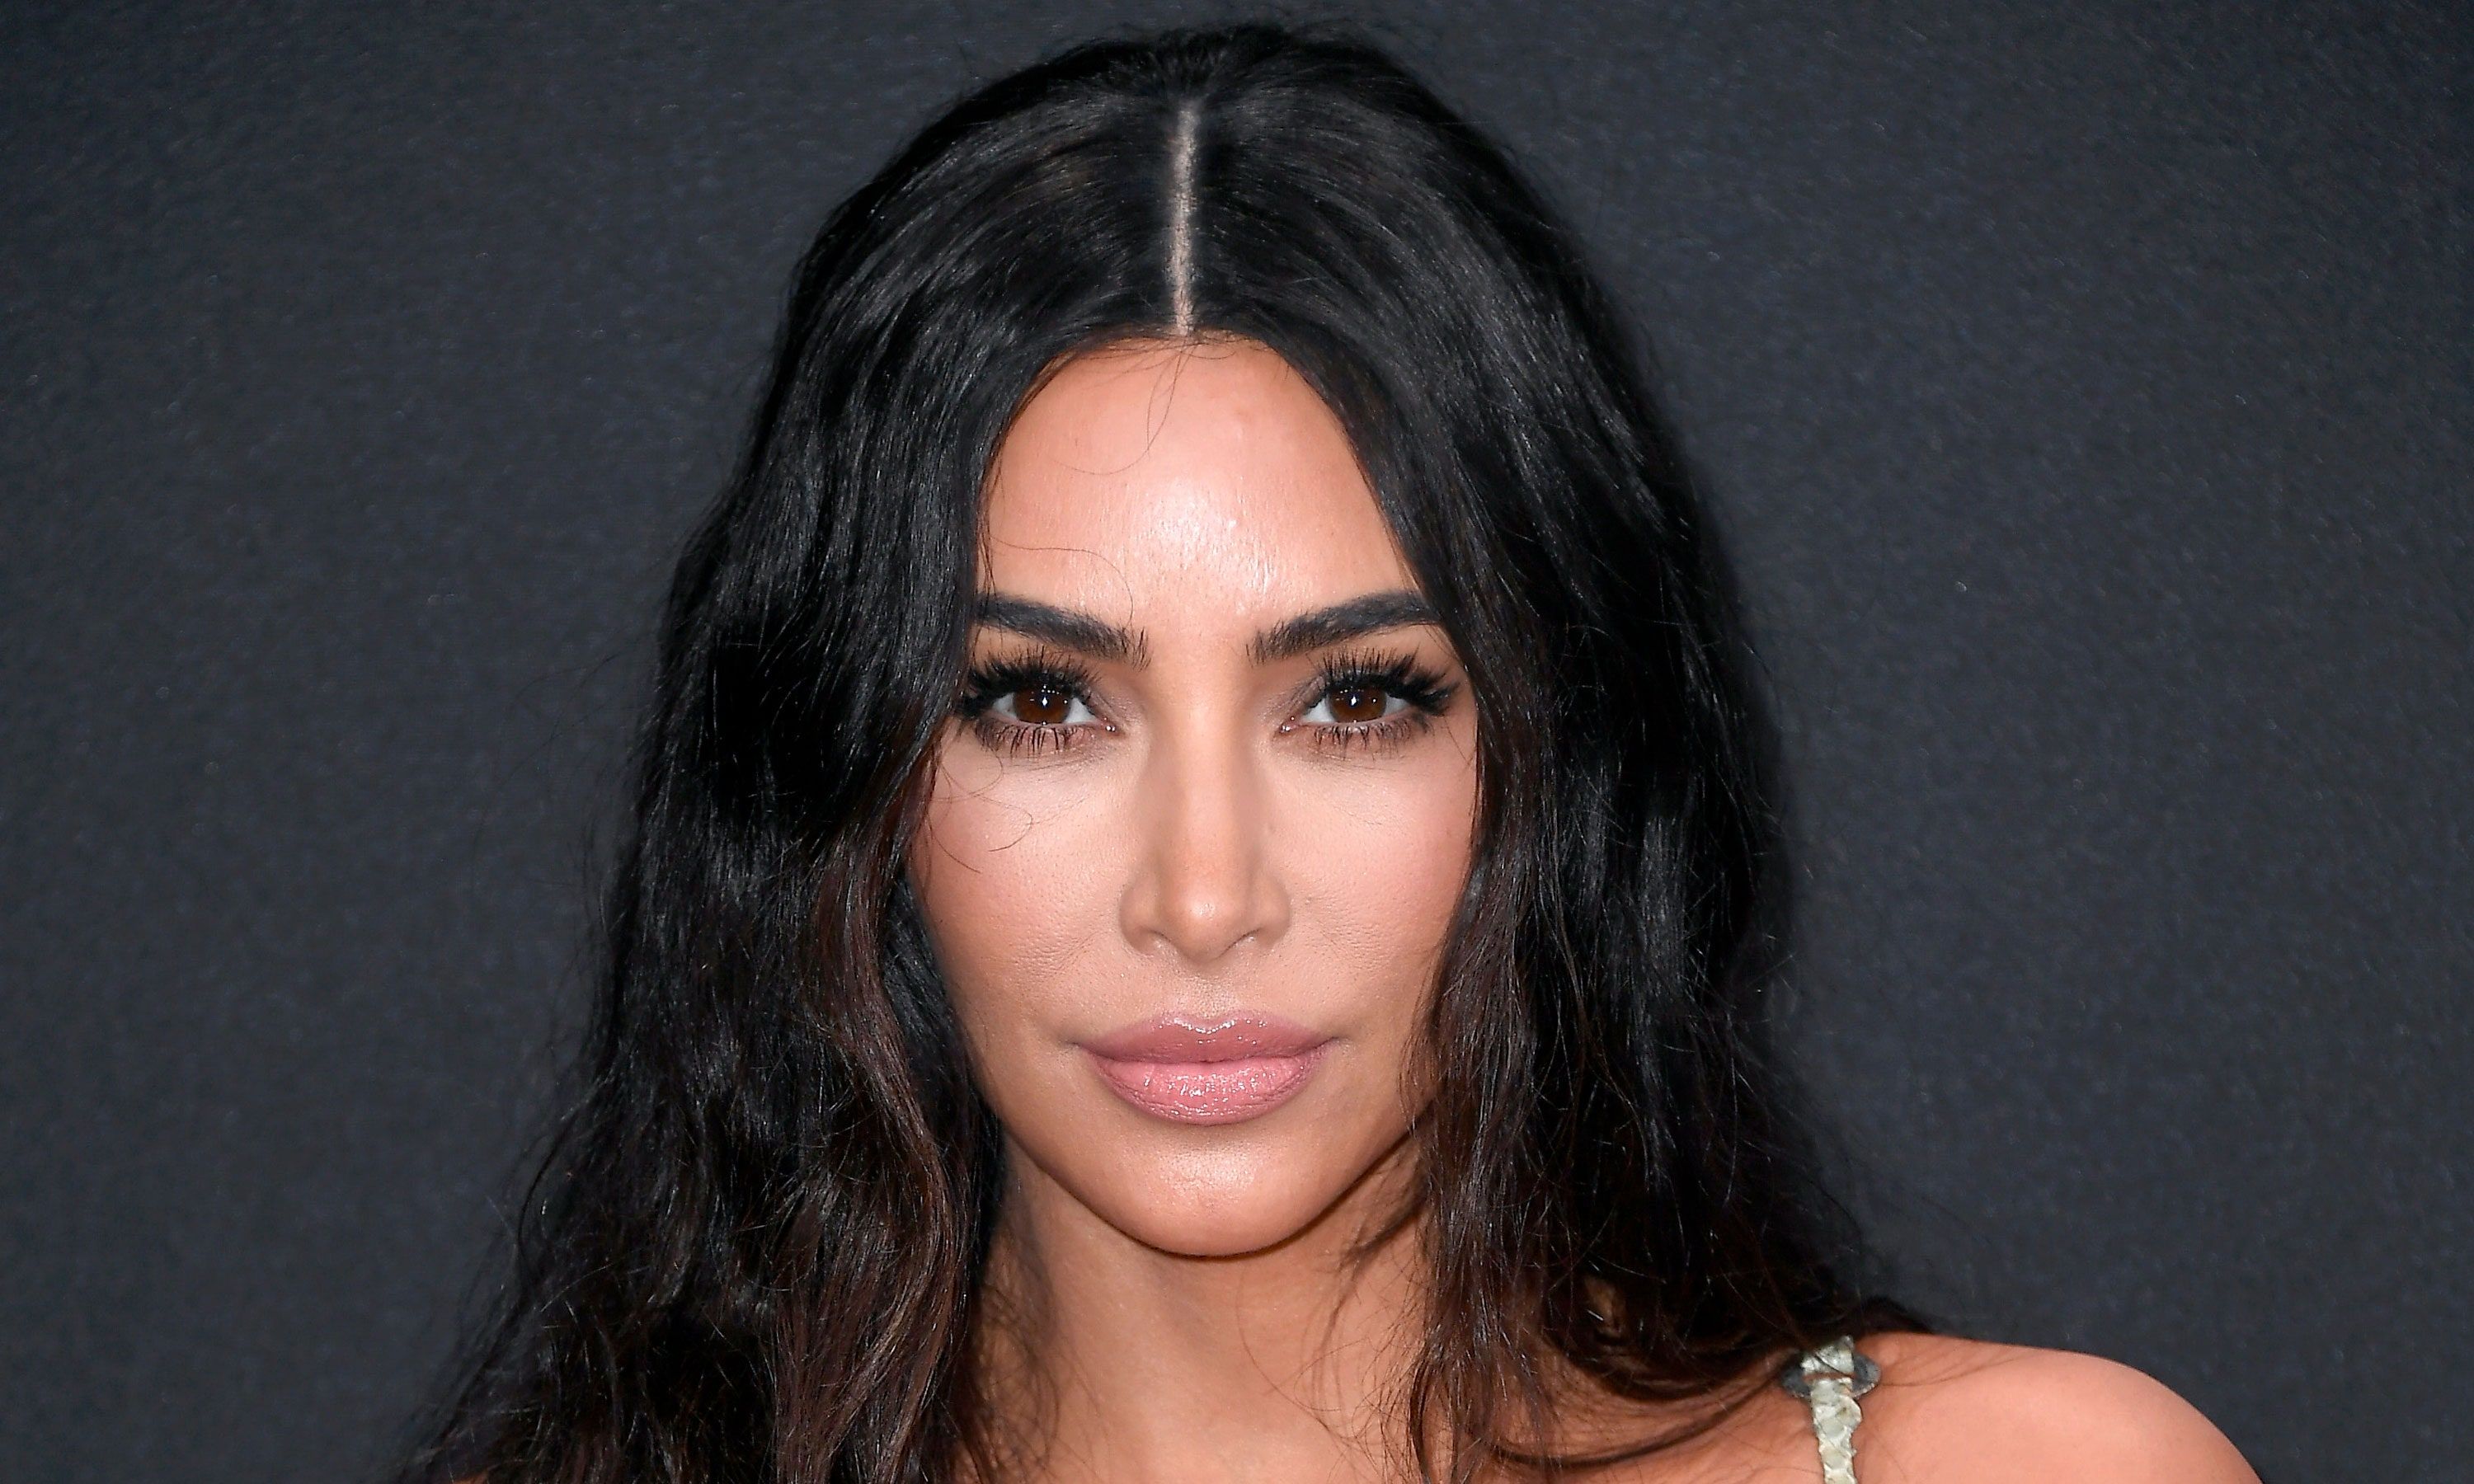 A Photo of Kim Kardashian's Pores Is Going Viral on Reddit